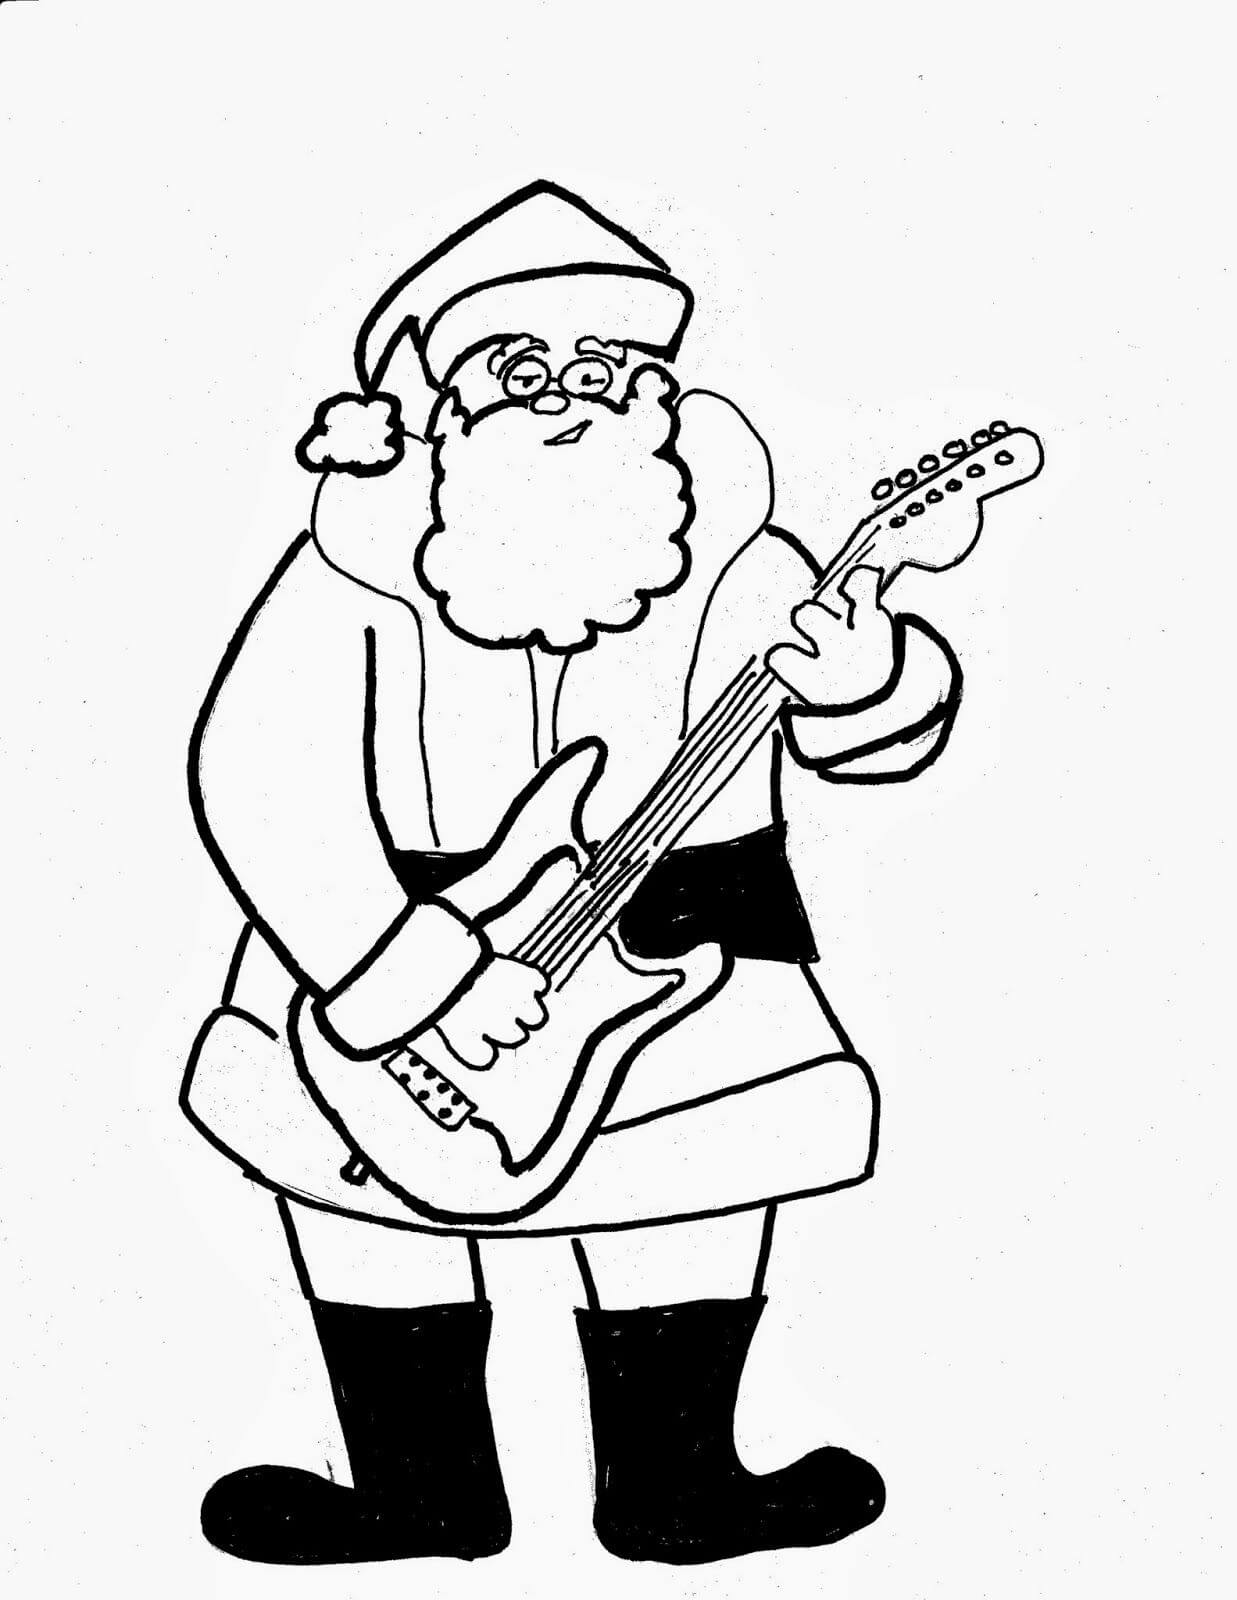 Målarbild Jultomten med Gitarr